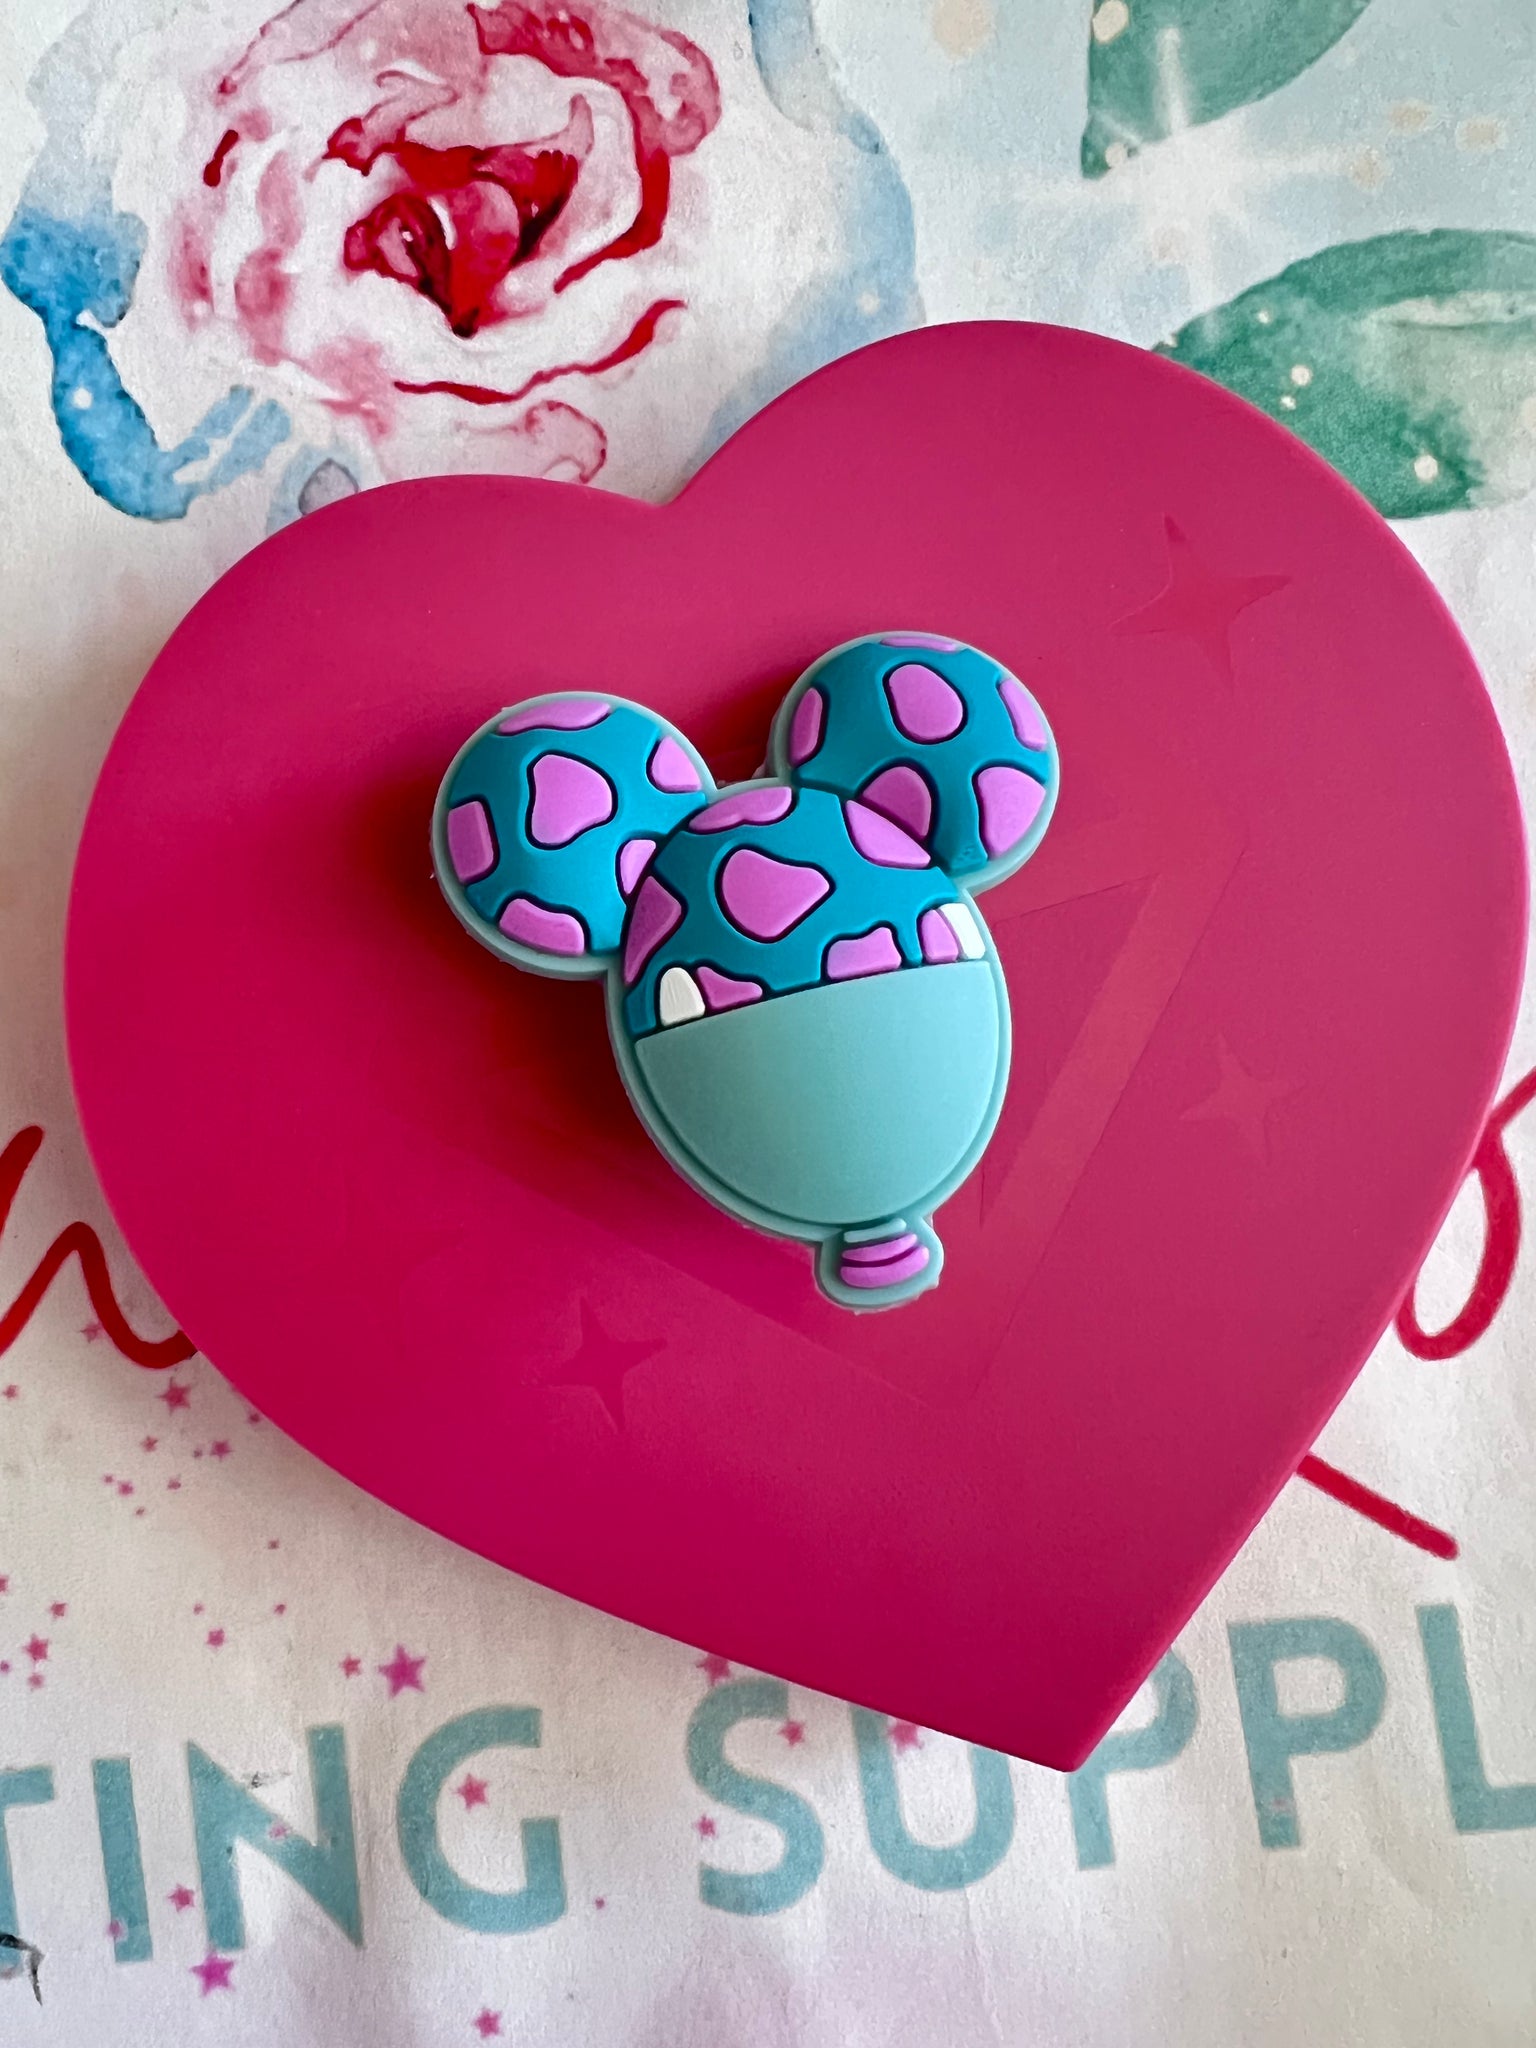 Teal/ purple mouse balloon charm